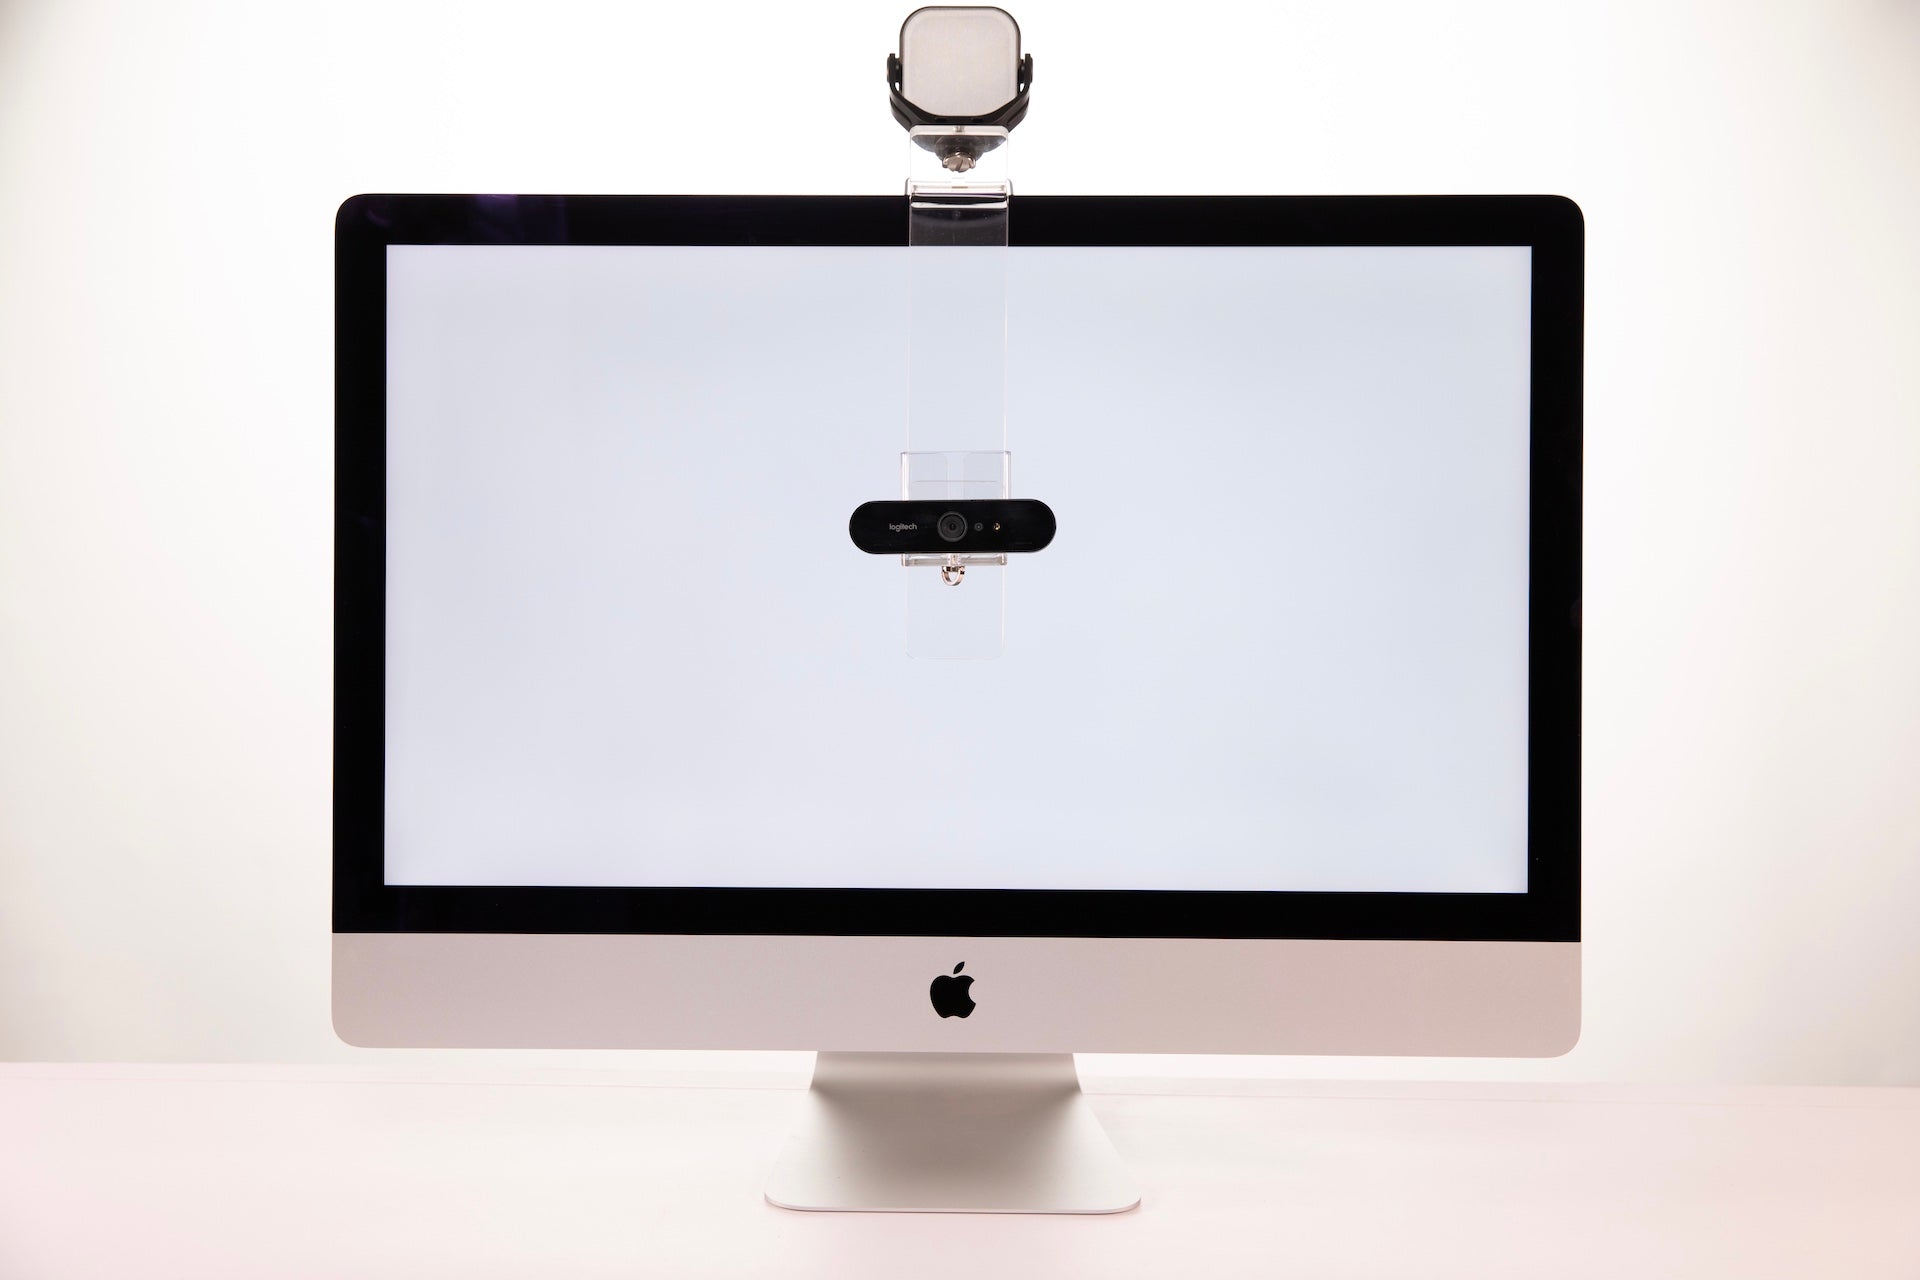 PlexiCam Road Warrior Pro with Logitech Brio on 27 inch Apple iMac